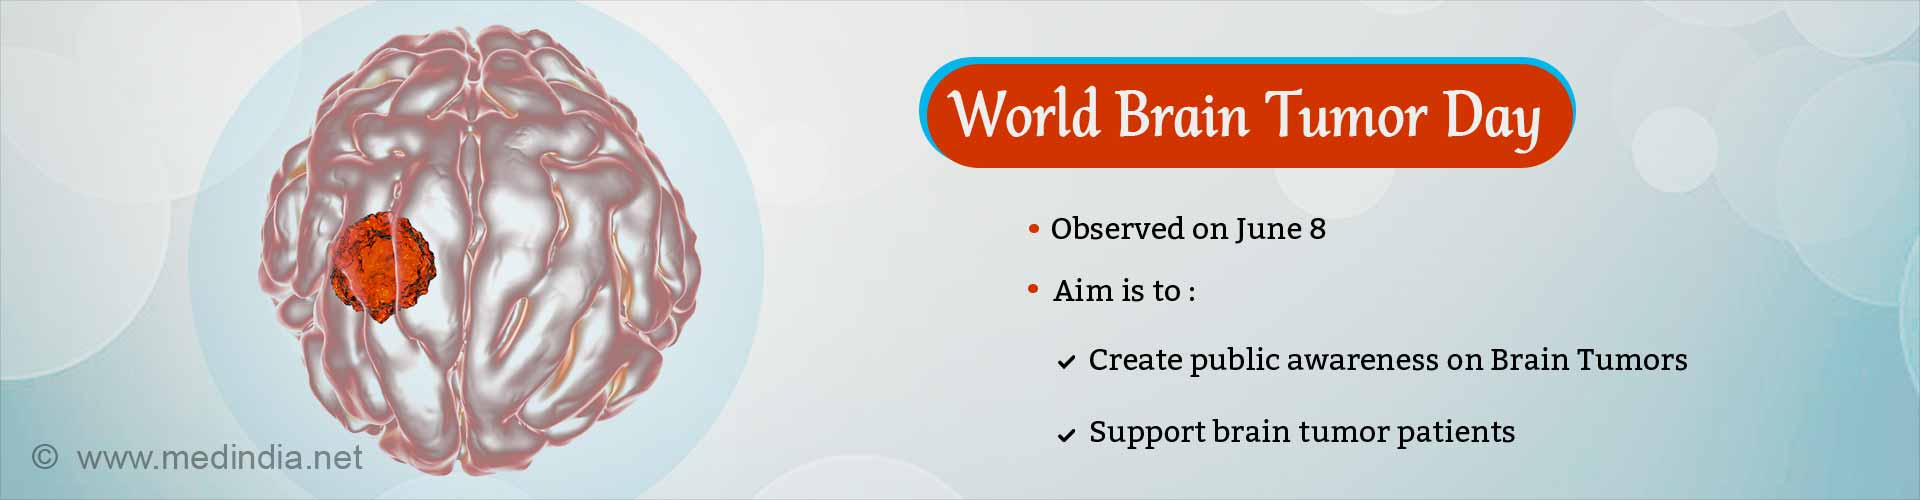 World Brain Tumor Day - Health Tips